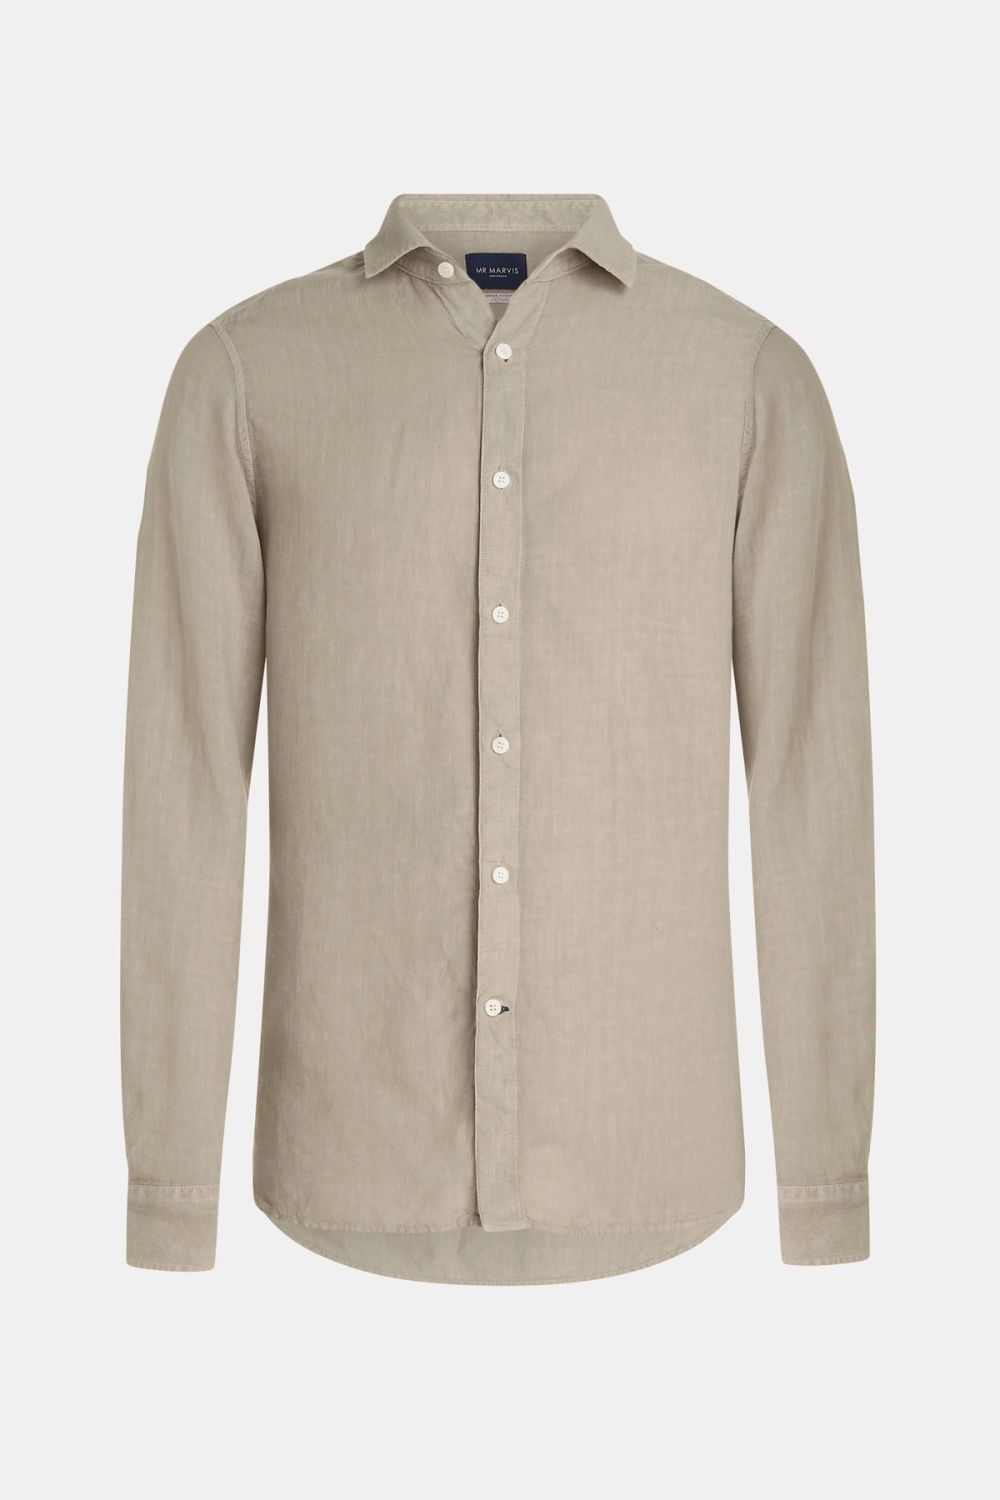 Baristas - The Linen Shirt